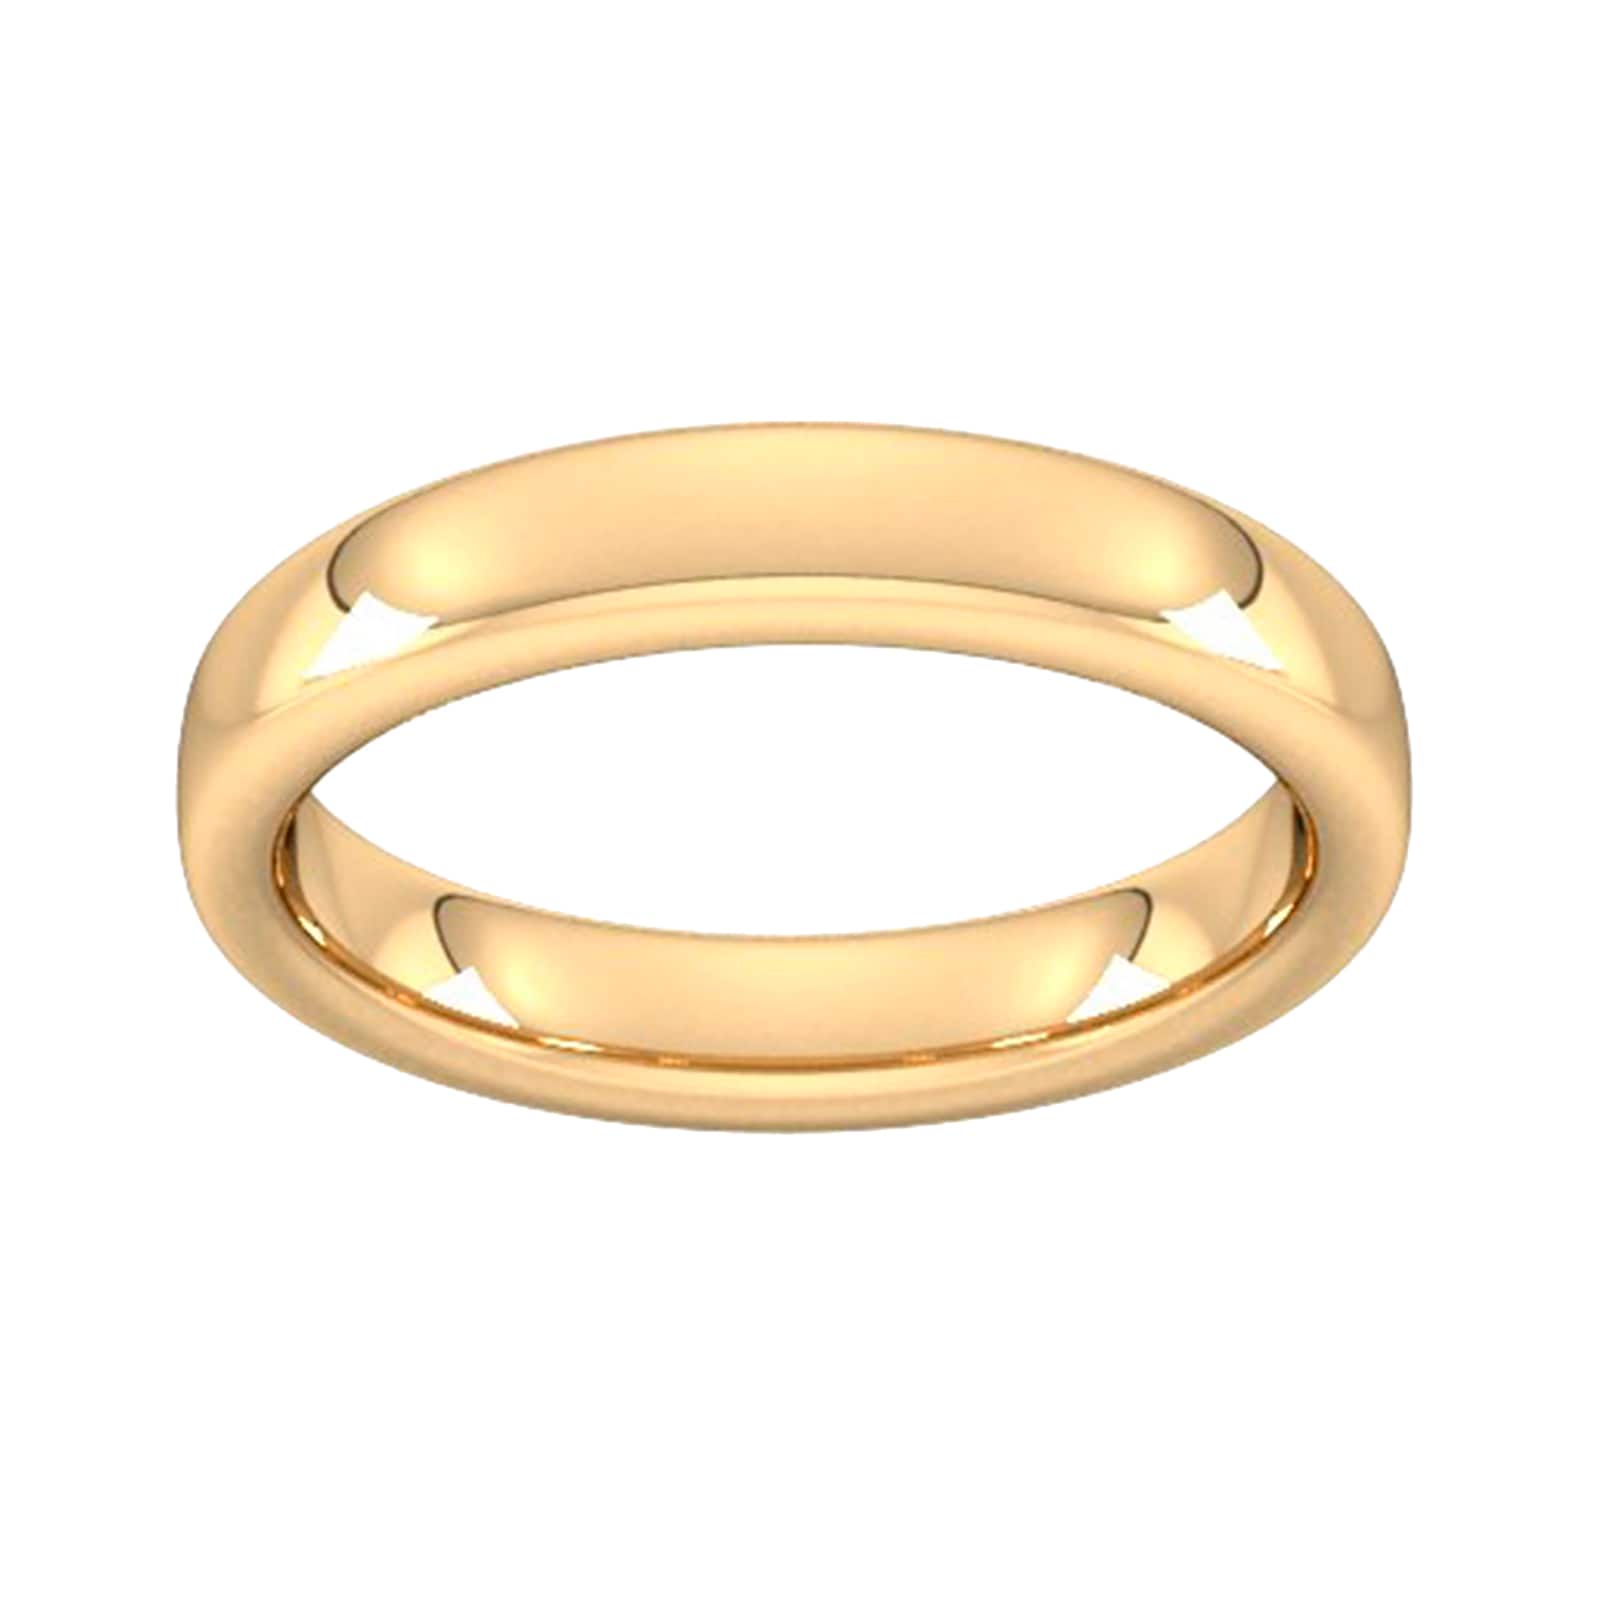 4mm Slight Court Extra Heavy Wedding Ring In 9 Carat Yellow Gold - Ring Size U